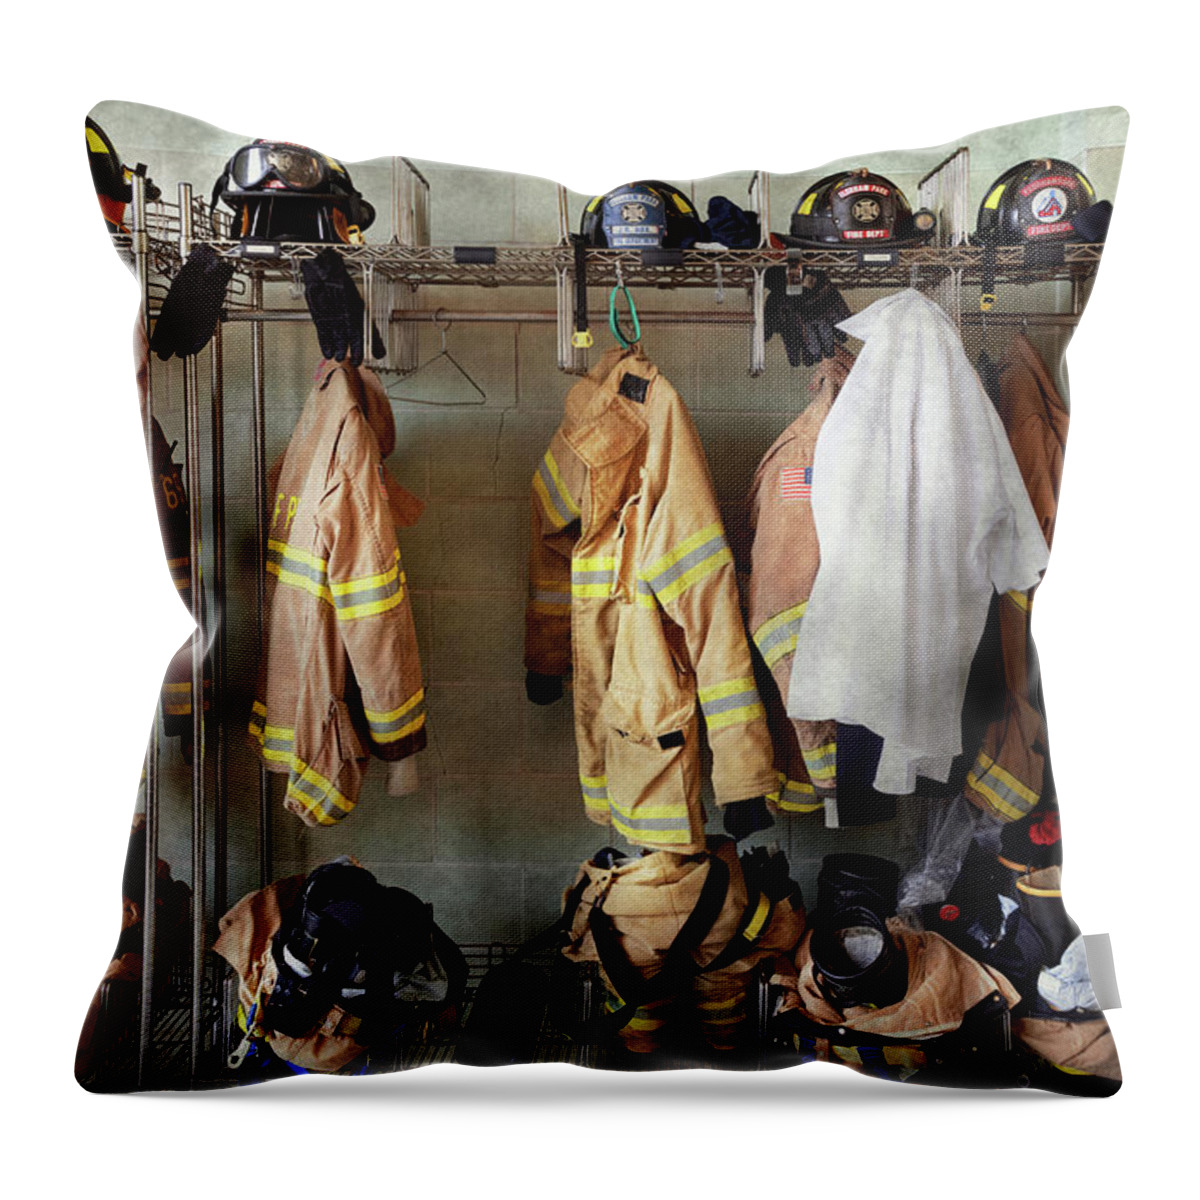 Fireman Art Throw Pillow featuring the photograph Firemen - Fire proof by Mike Savad